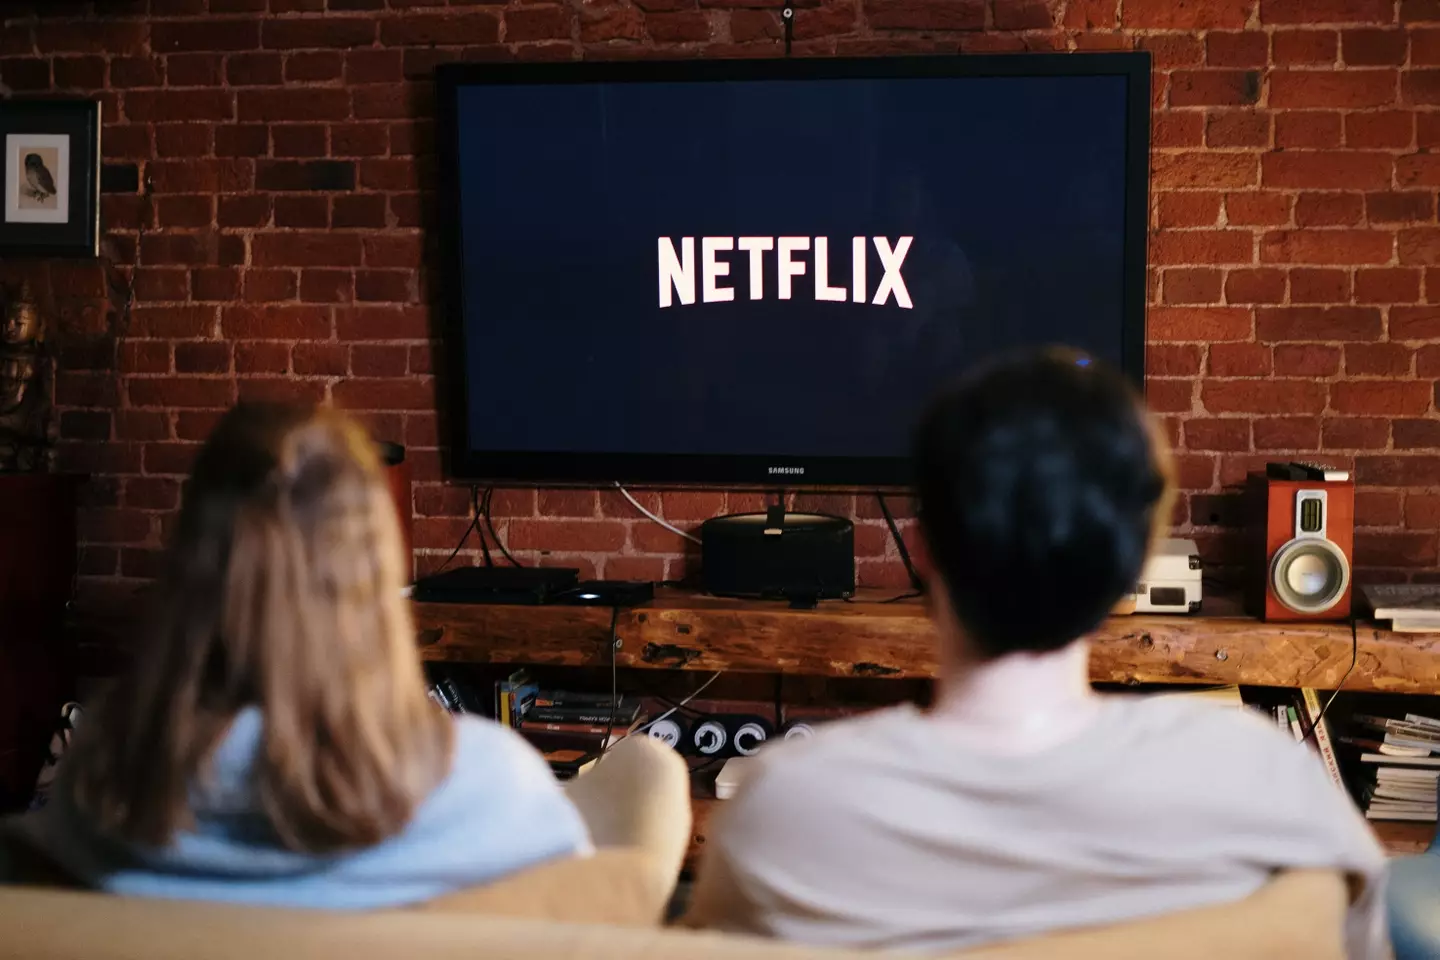 Netflix's share price plummeted following the news.